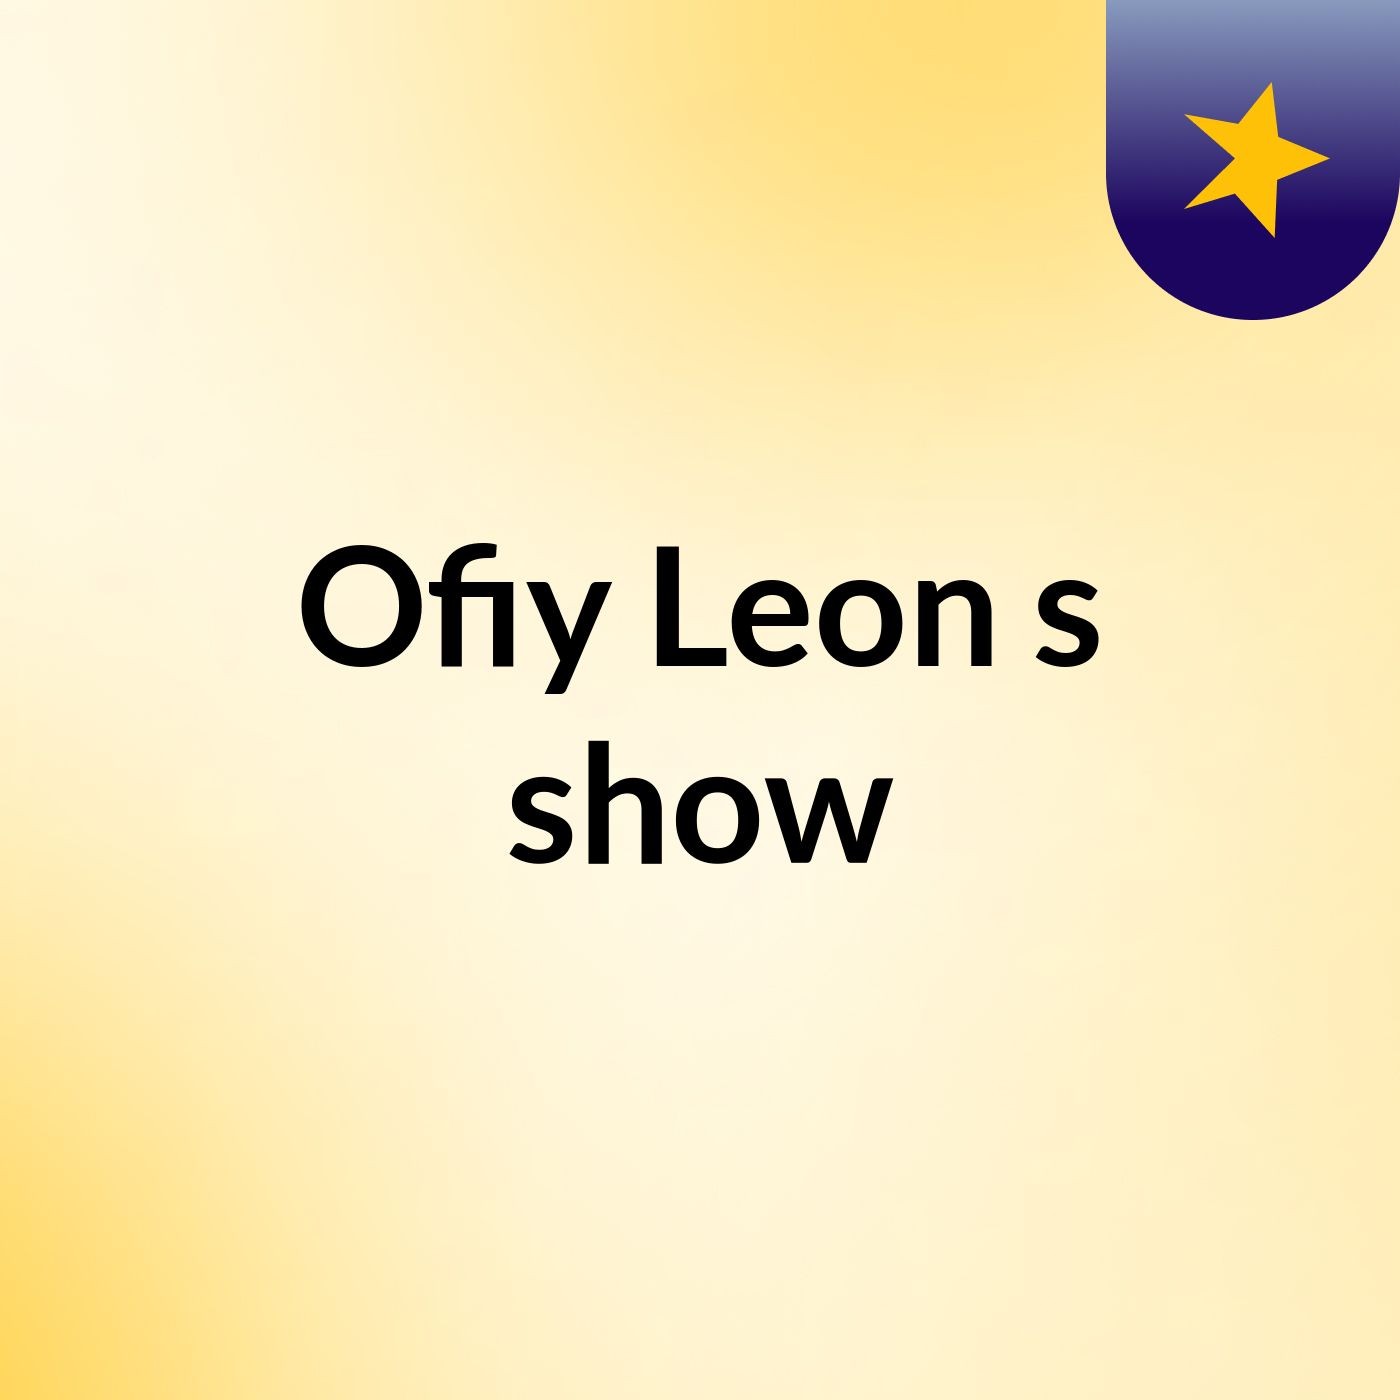 Episode 13 - Ofiy Leon's show